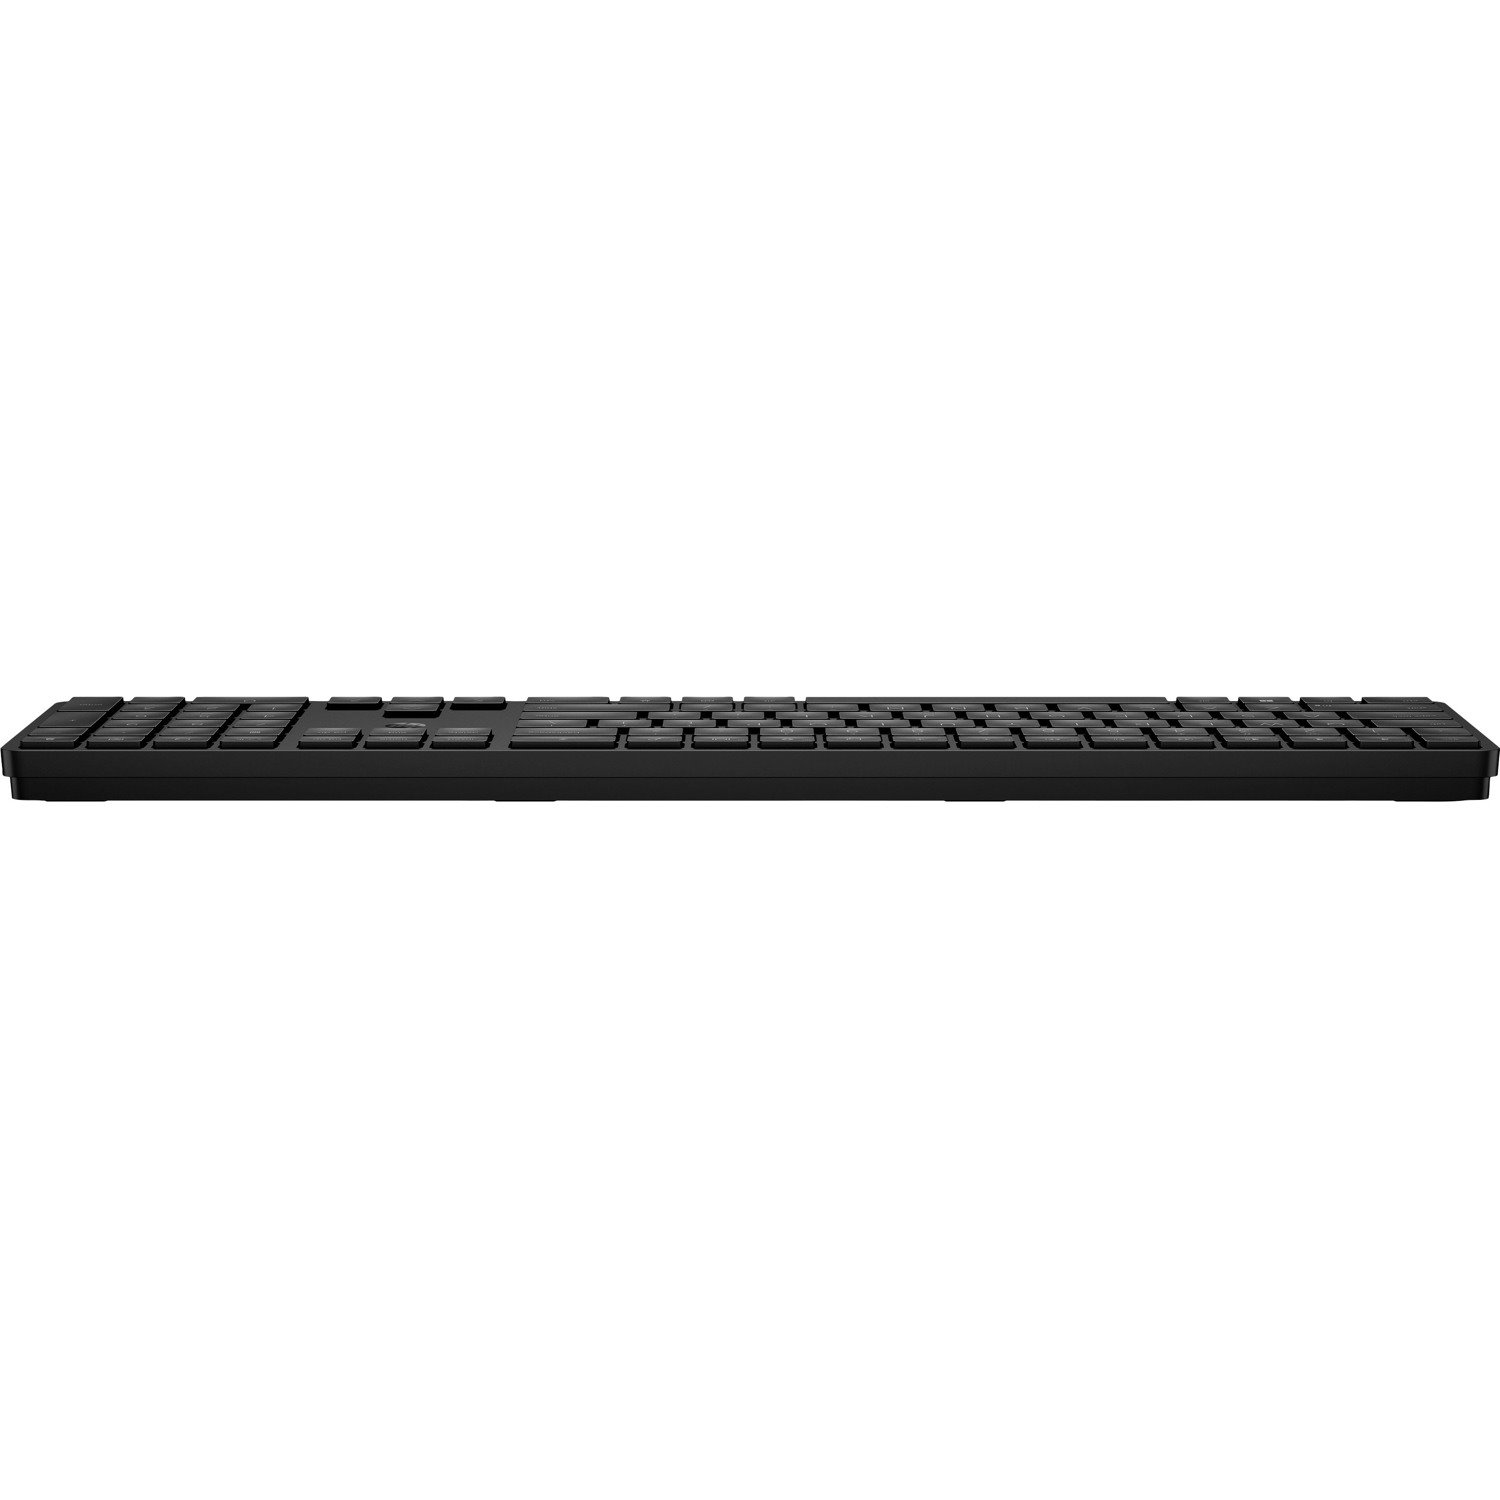 HP 455 Keyboard - Wireless Connectivity - USB Type A Interface - Black